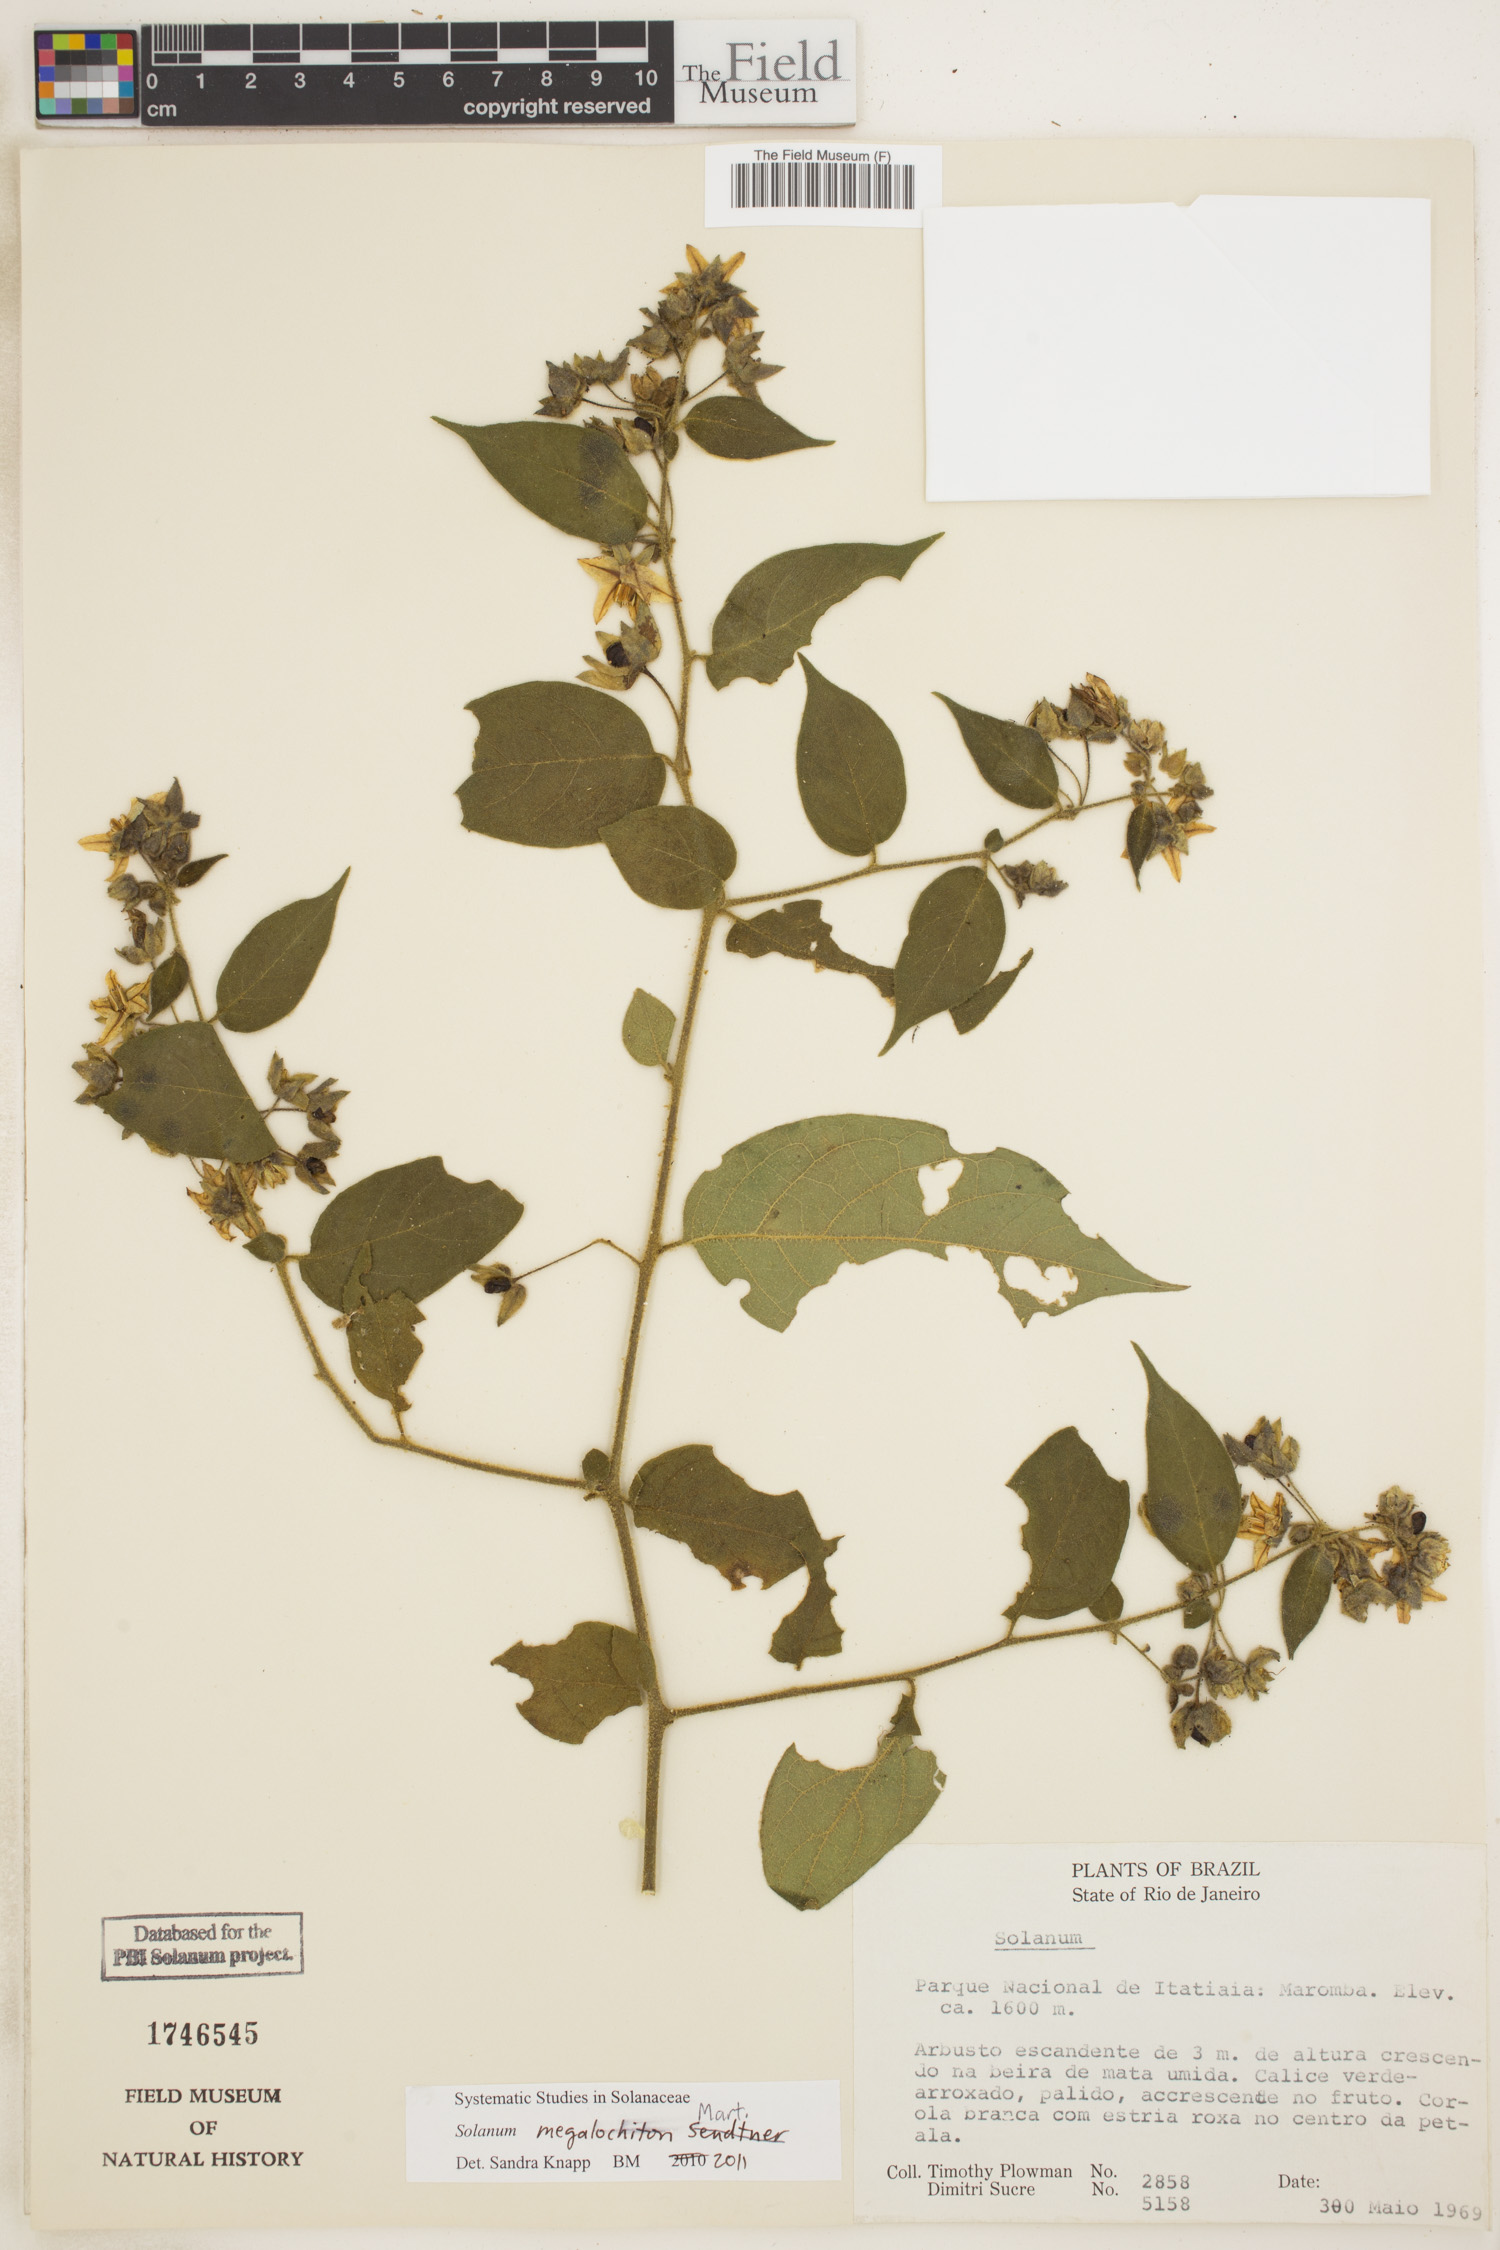 Solanum megalochiton image